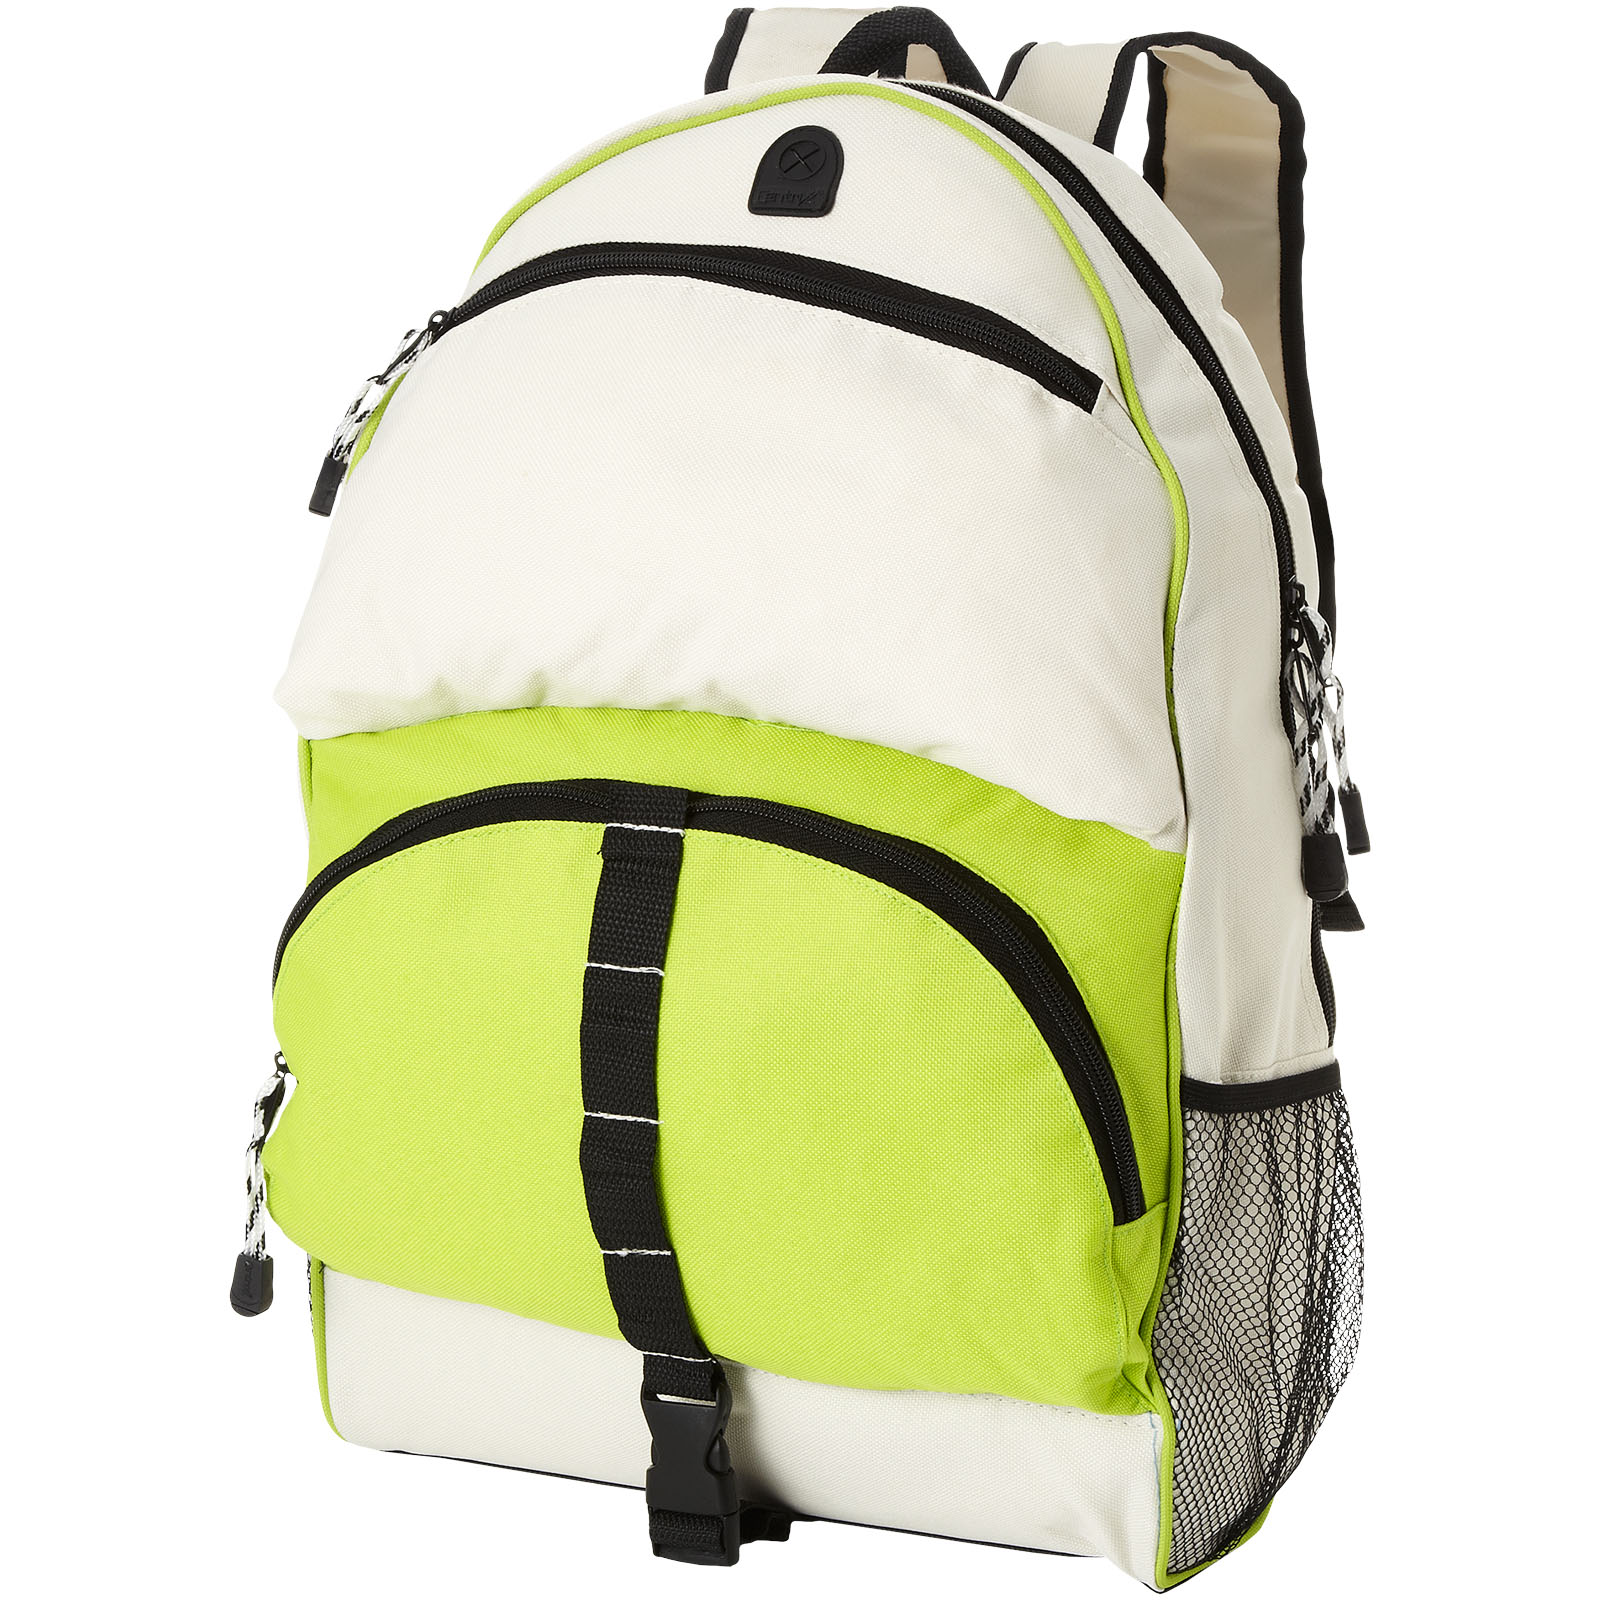 Backpacks - Utah backpack 23L